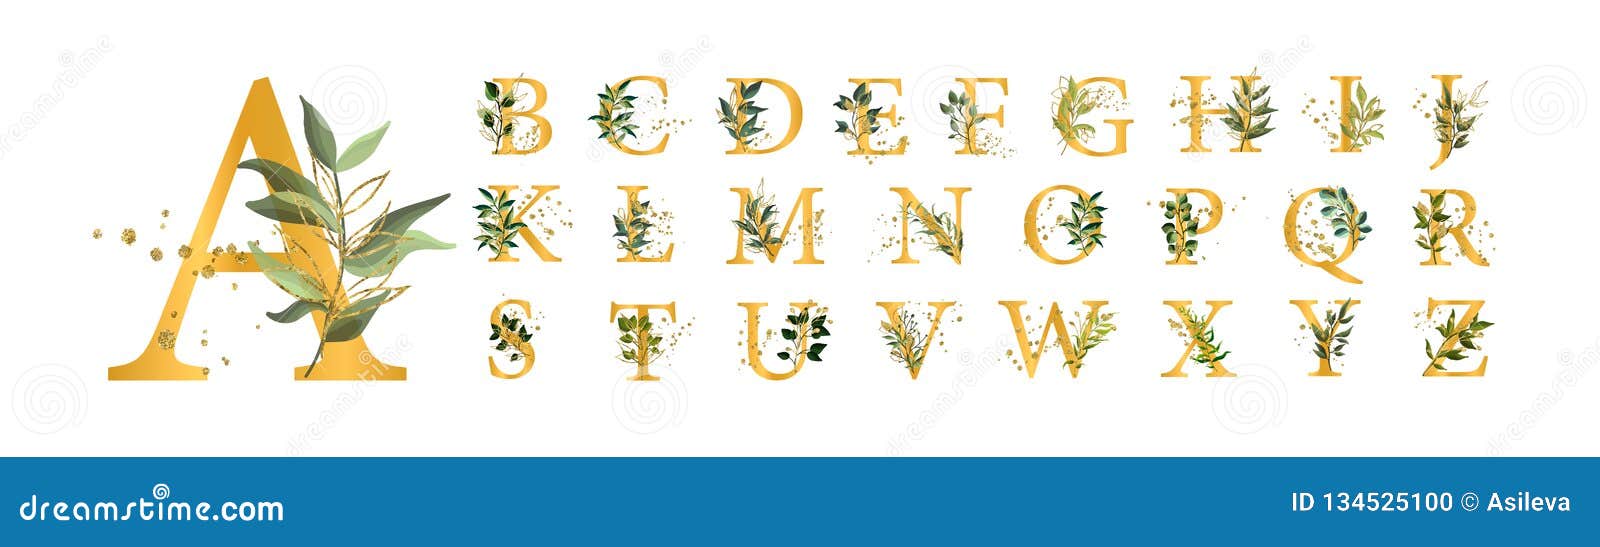 golden floral alphabet font uppercase letters with flowers leaves gold splatters